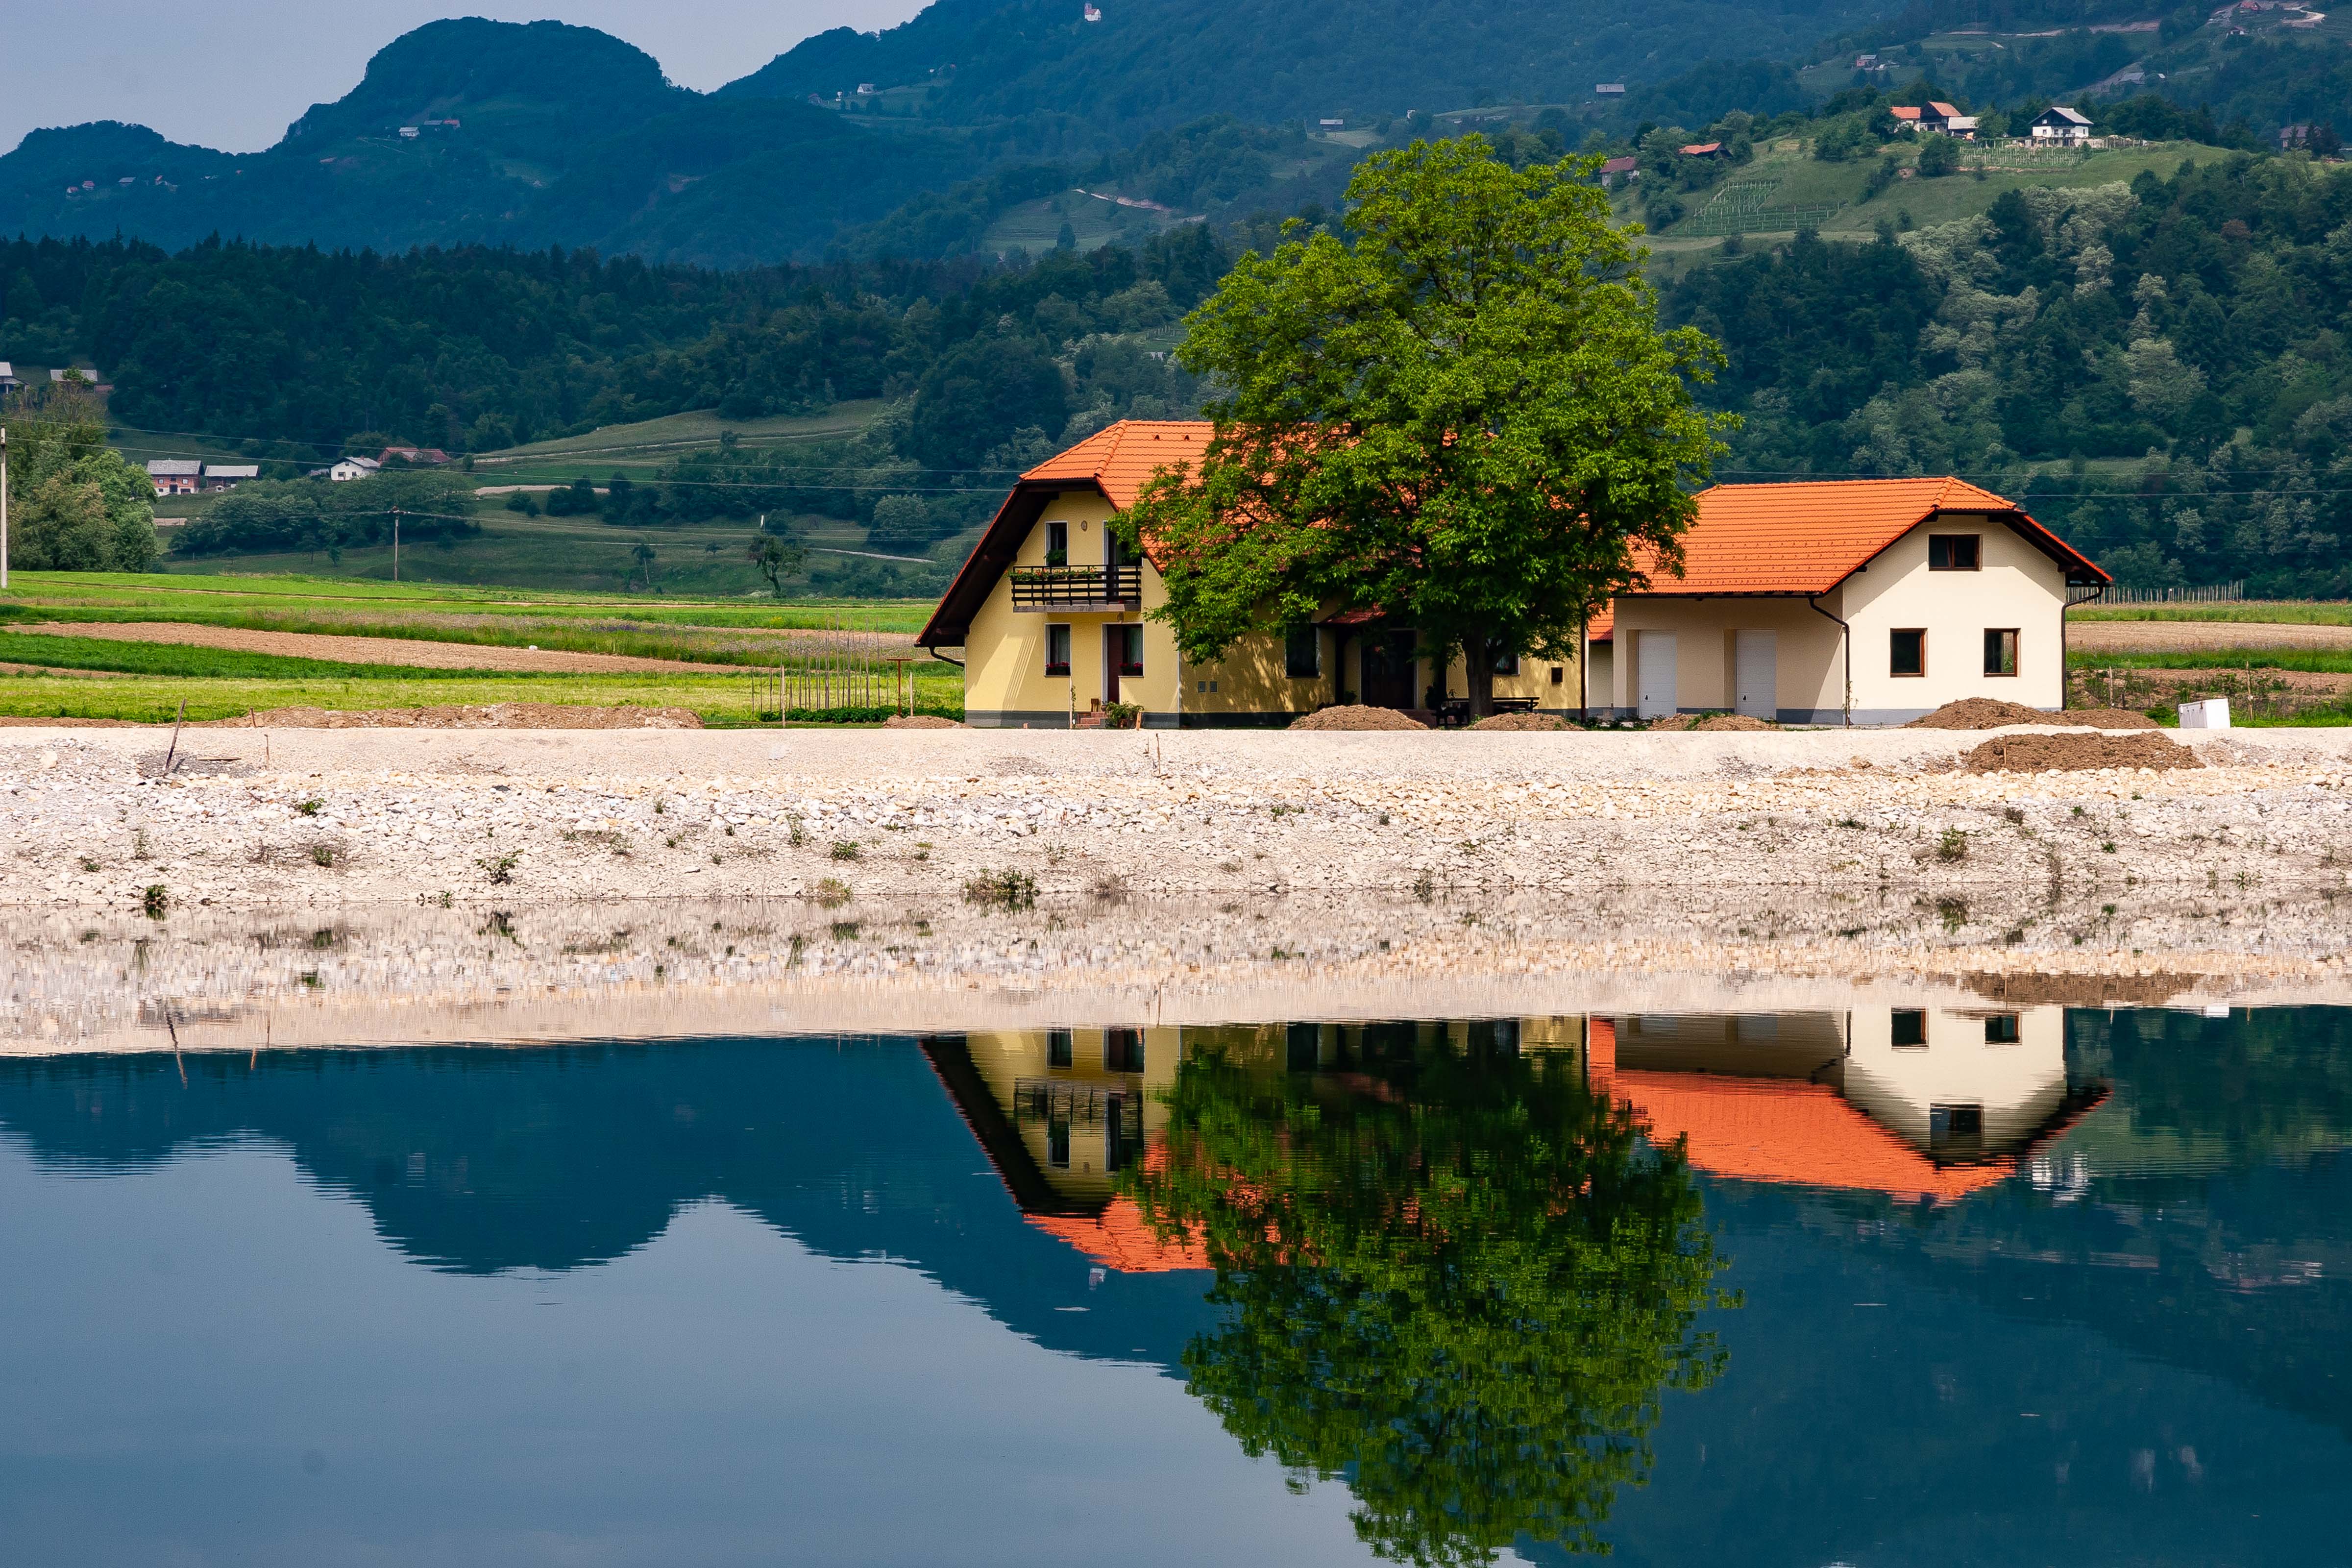 Slovenia, Sevnica Prov, House Reflection, 2006, IMG 7691